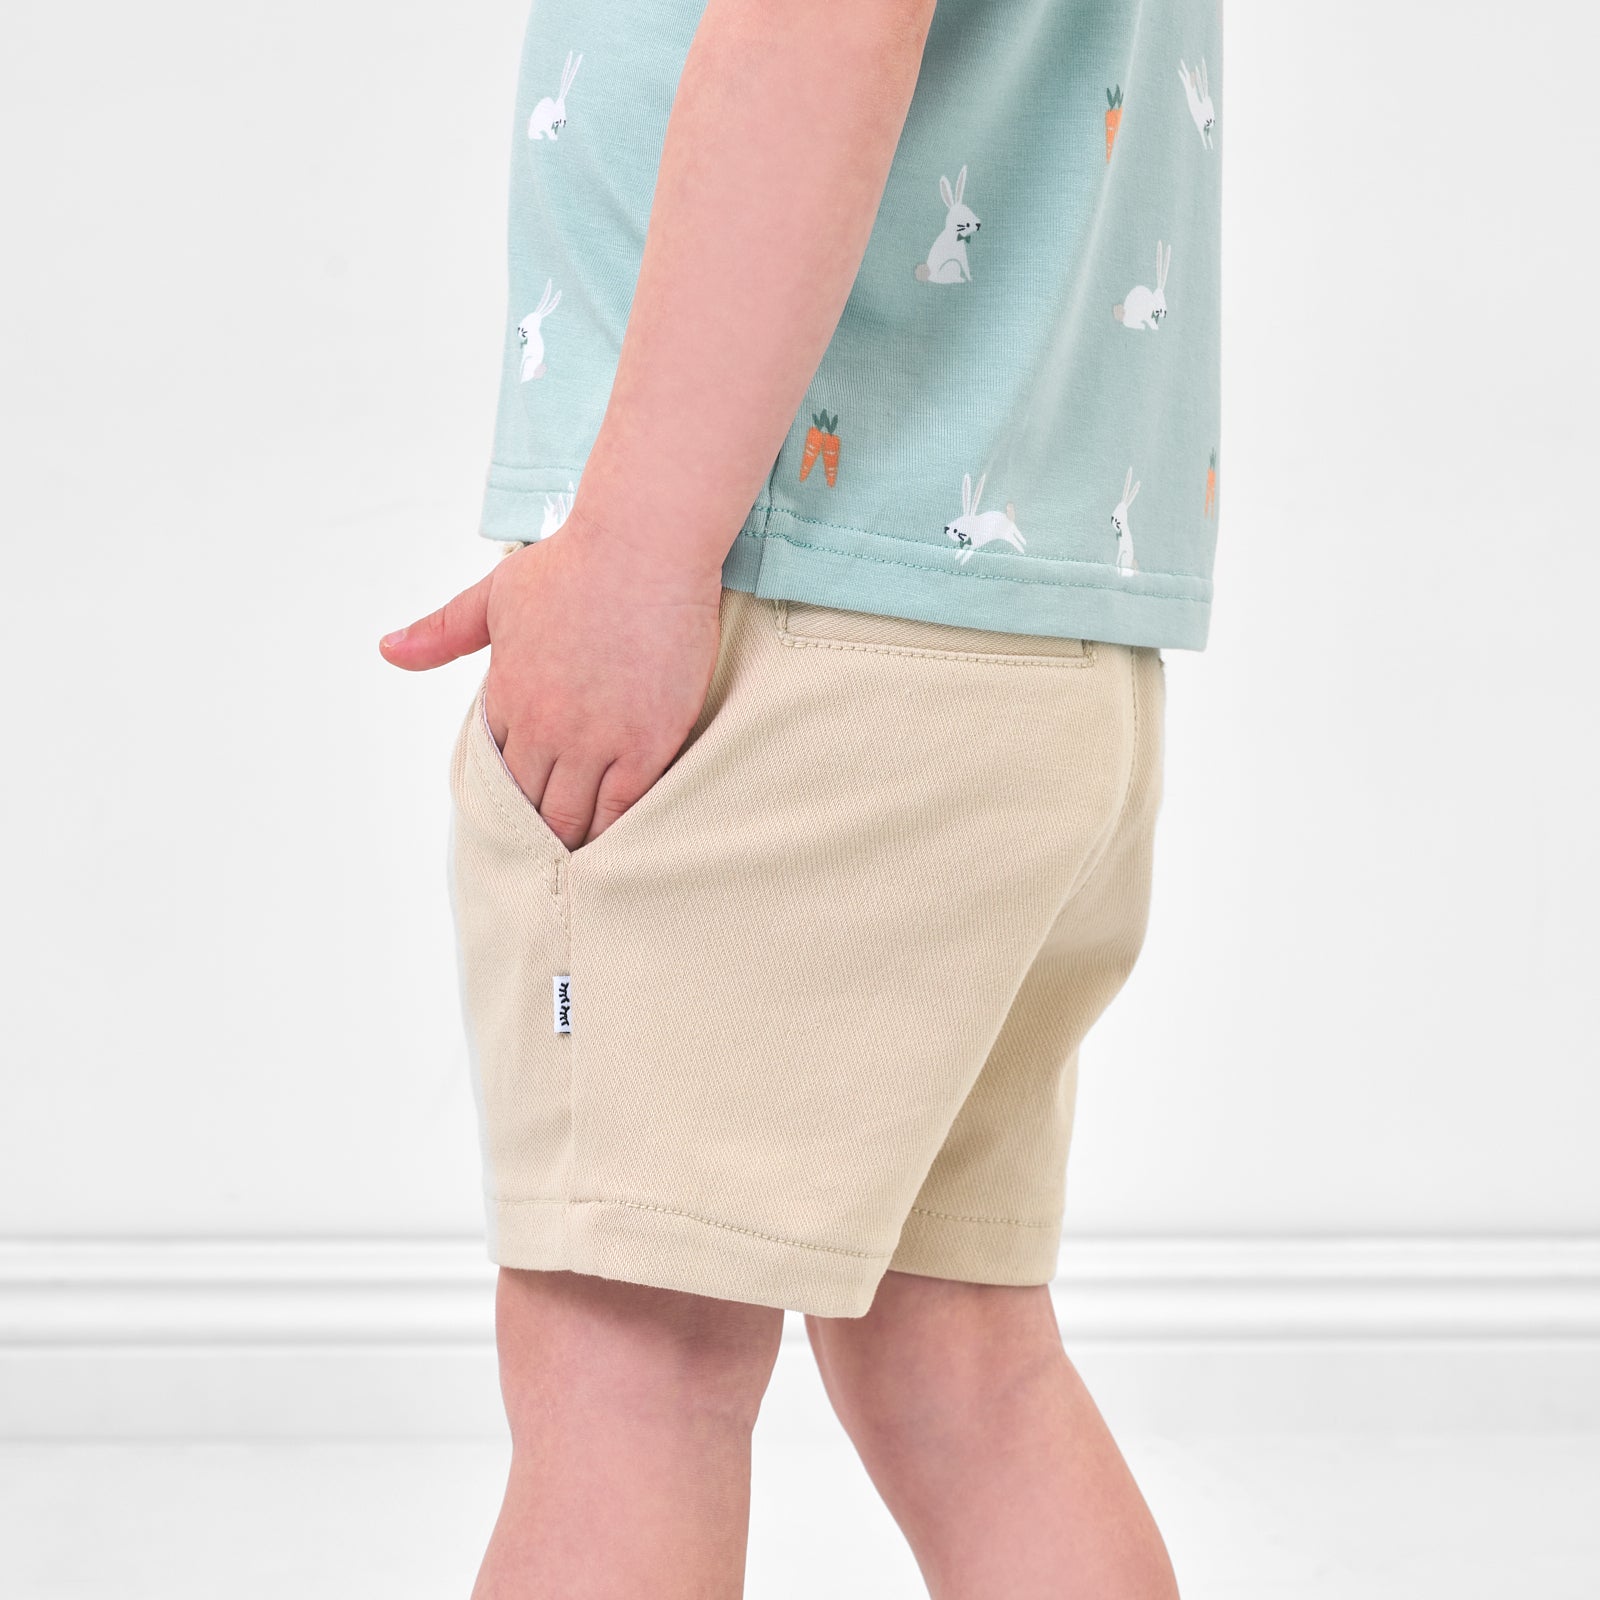 Close up side view image of a child wearing Light Khaki chino shorts